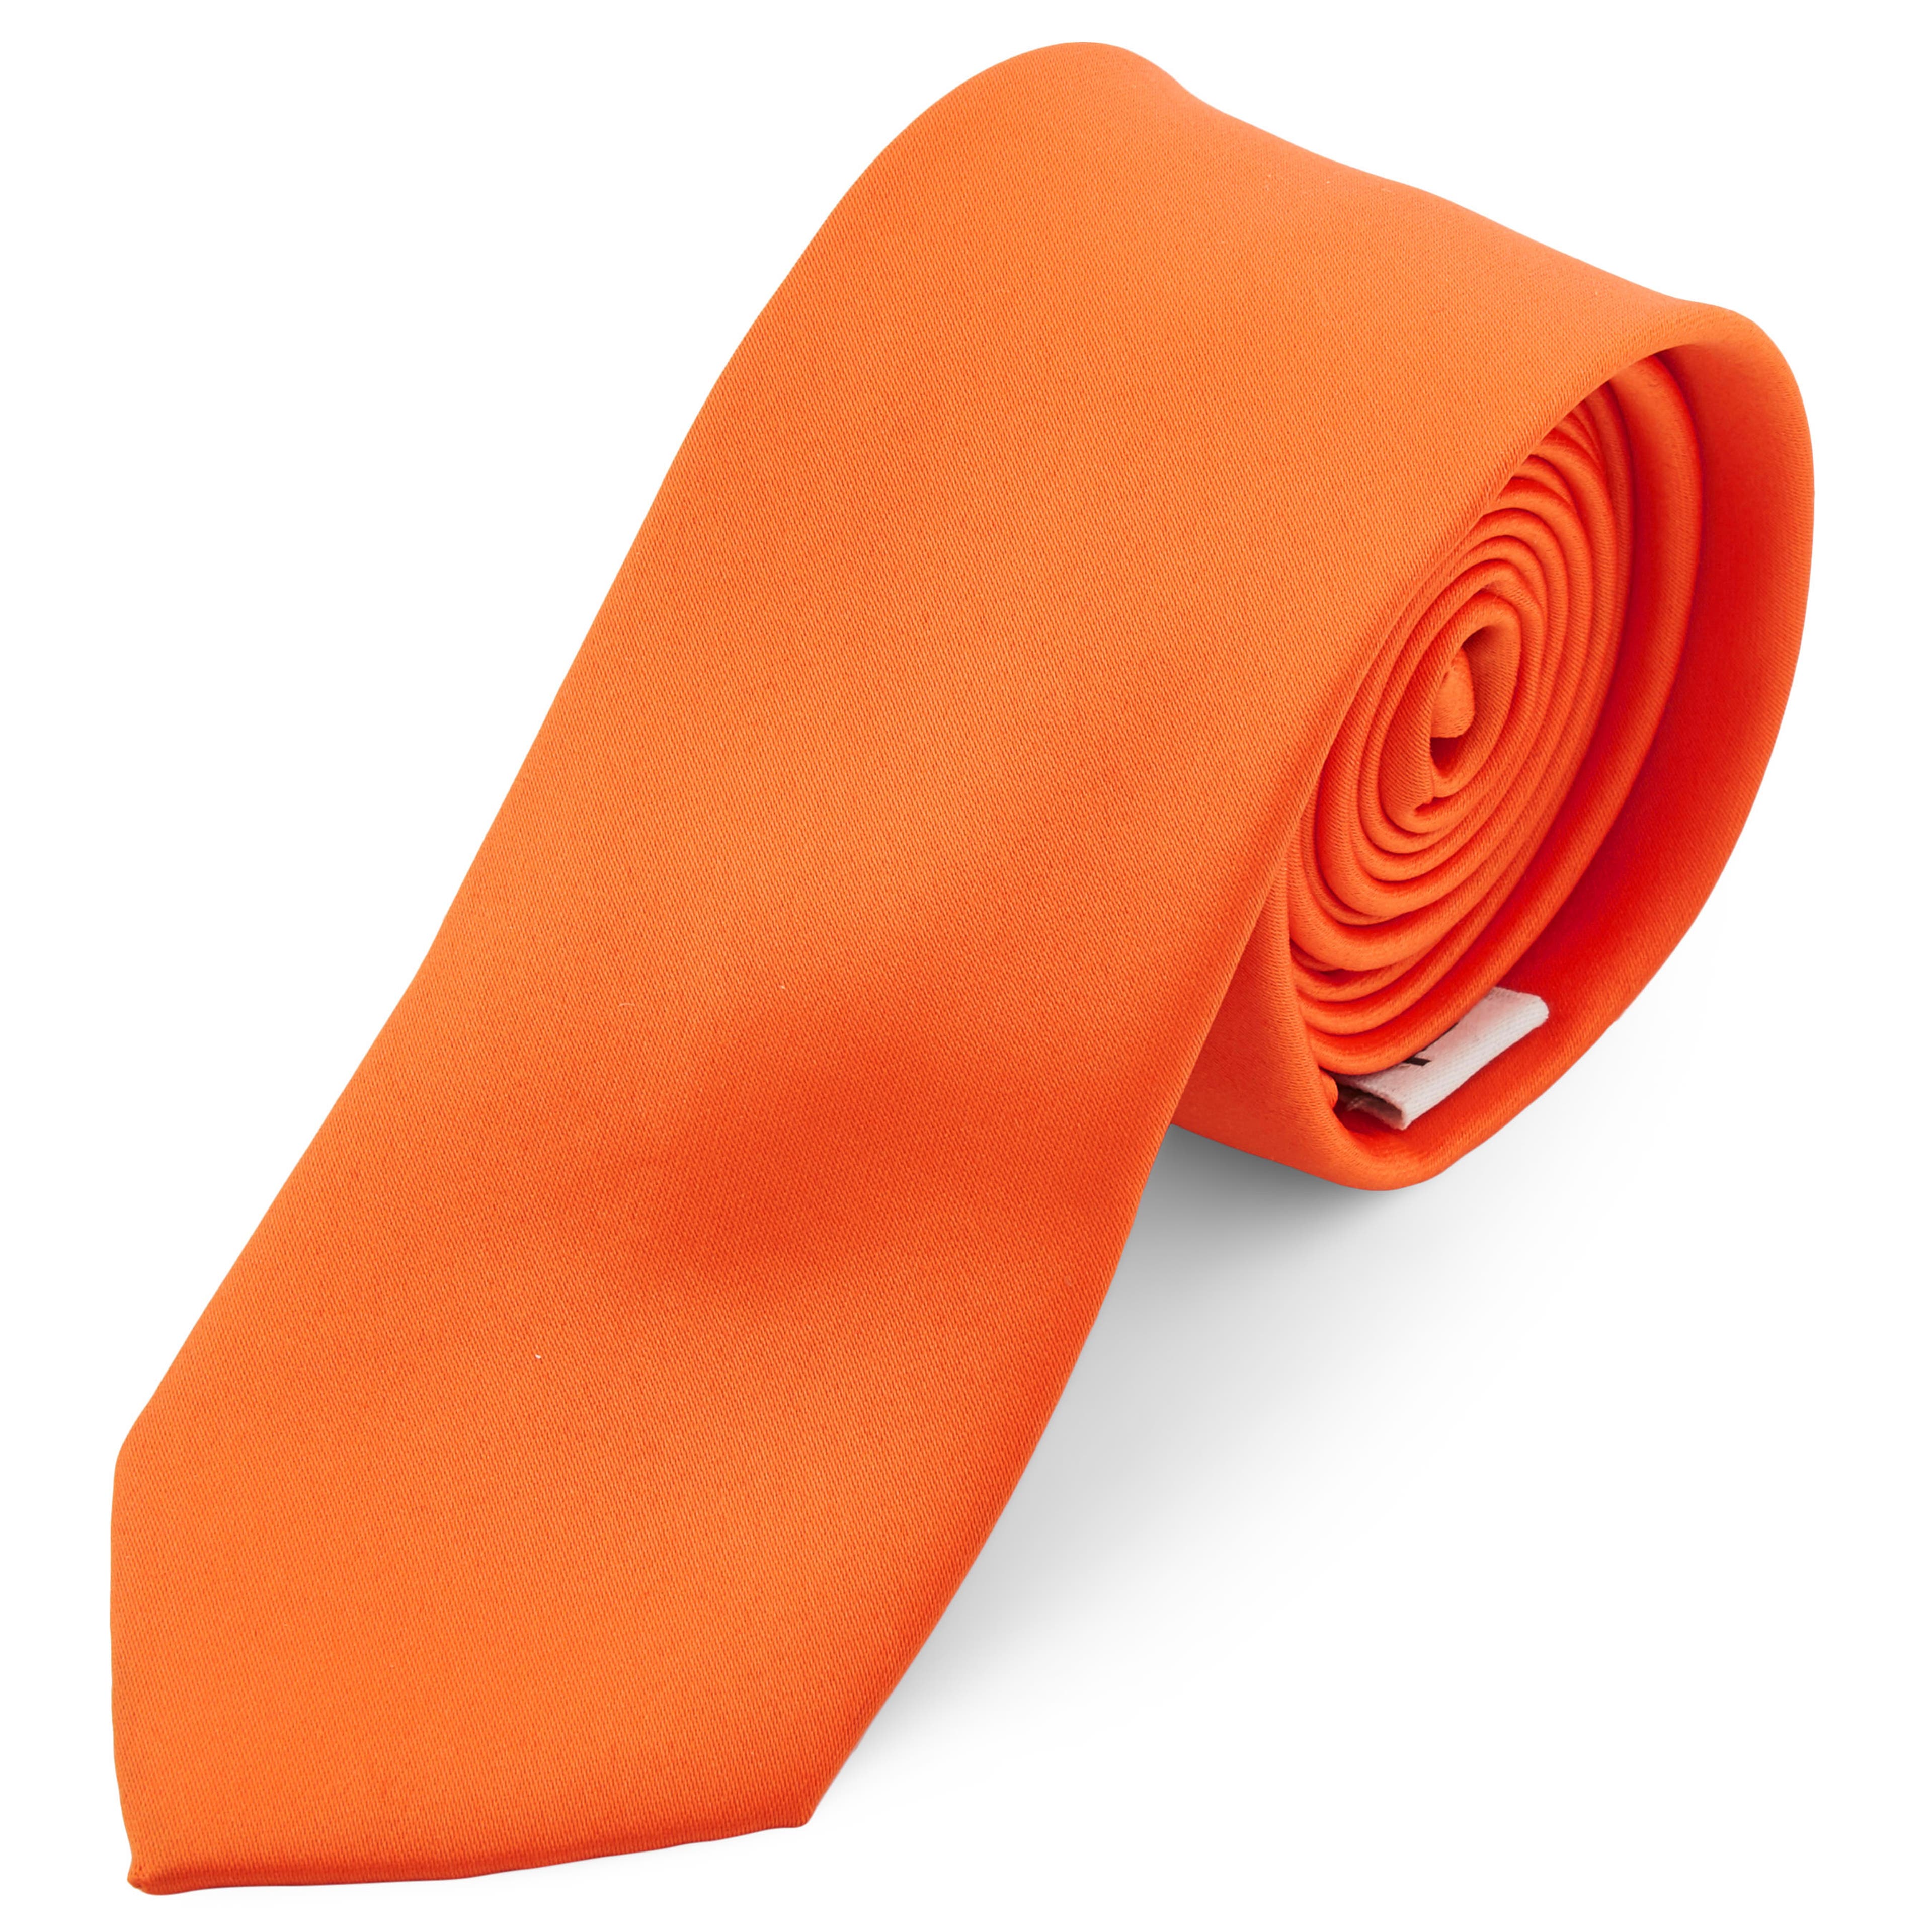 Corbata básica naranja chillón 6 cm